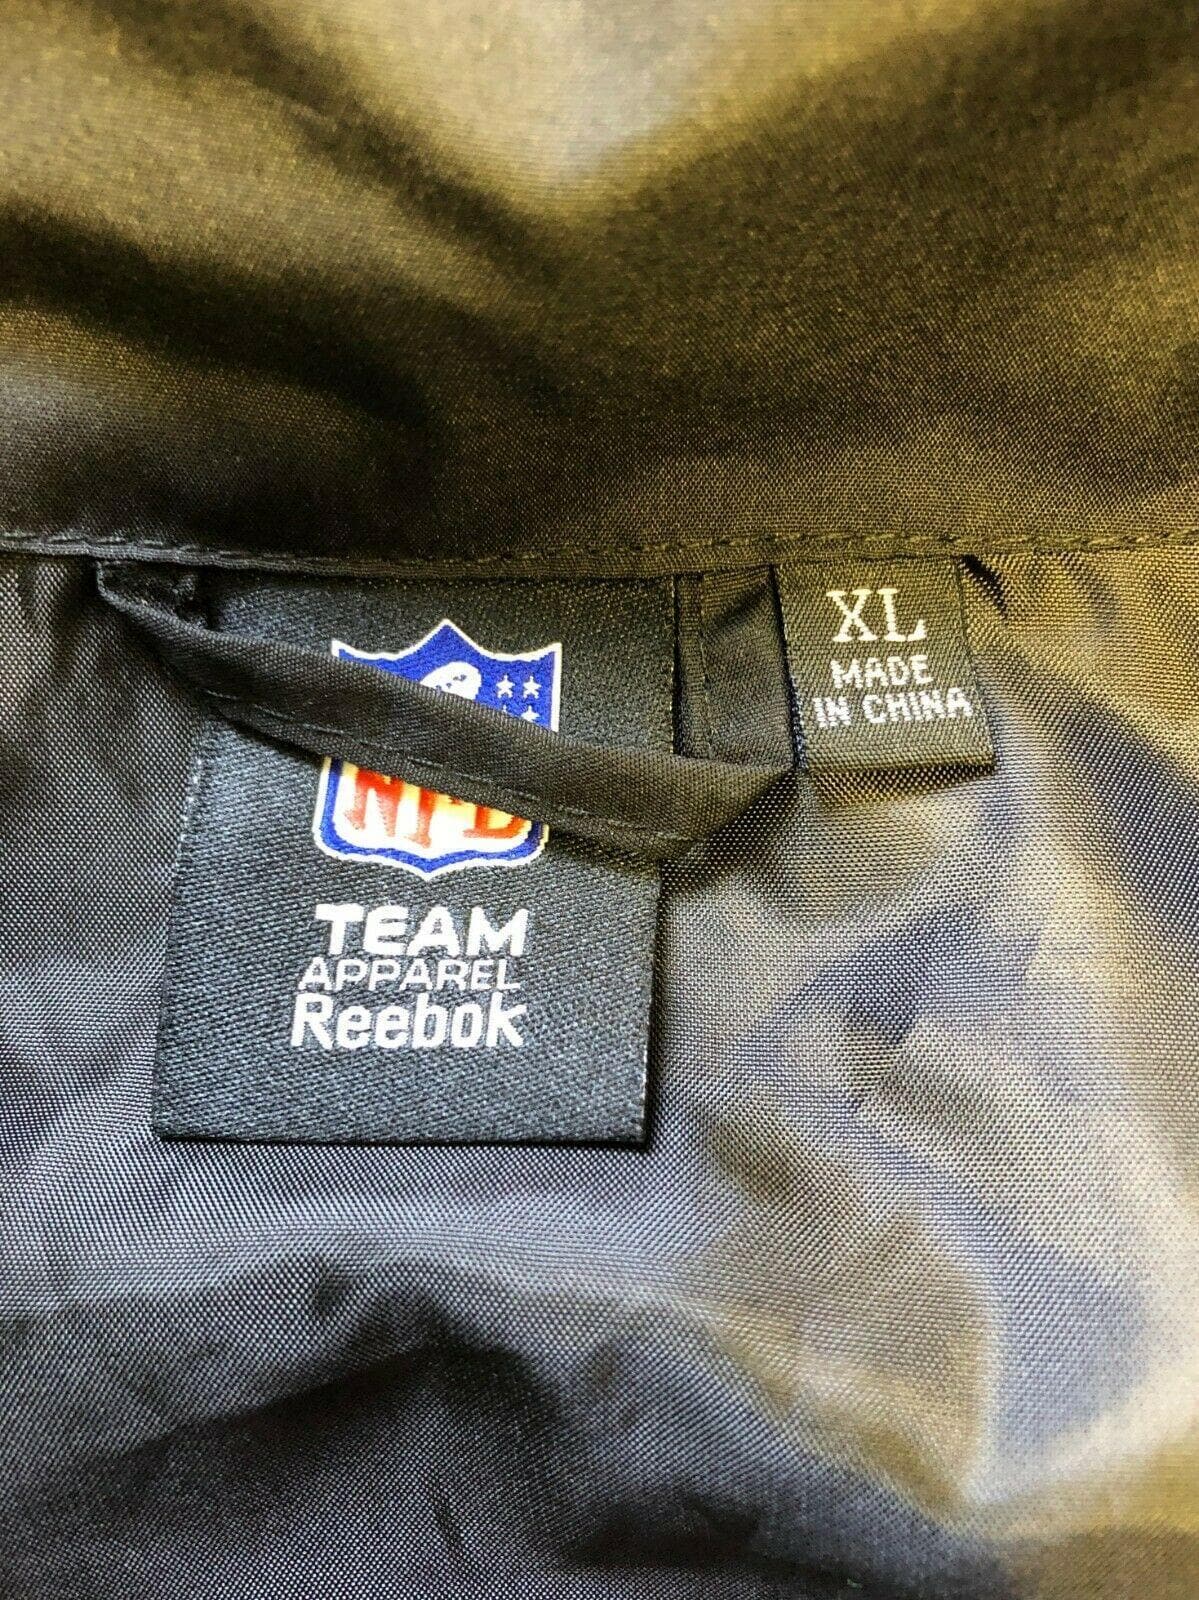 Reebok, Shirts, Authentic Utah Grizzlies Brand New Hockey Jersey